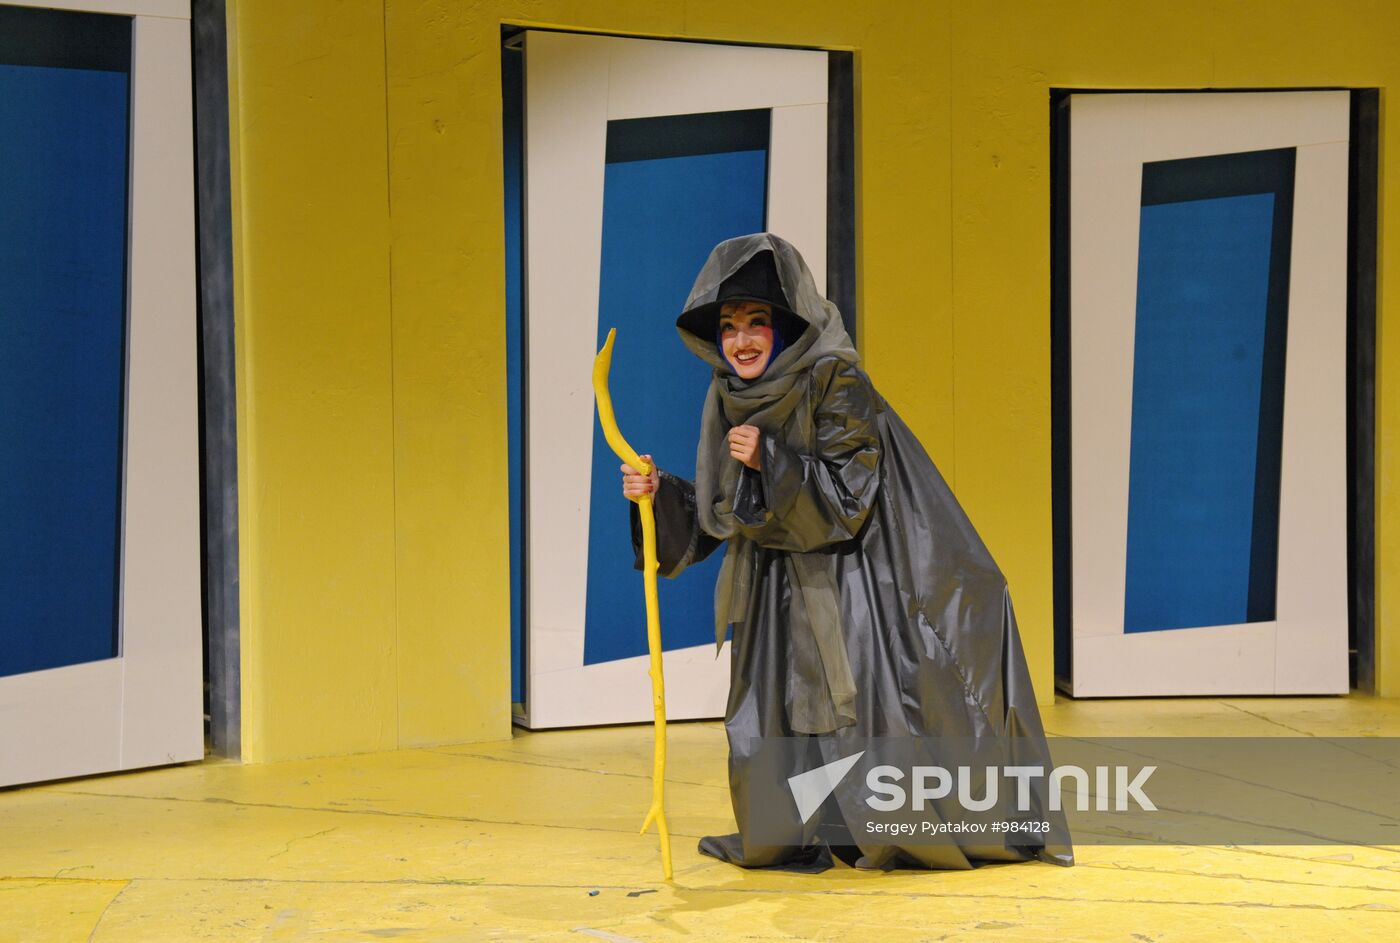 Chekhov Theater rehearses play Snow White and the Seven Dwarfs